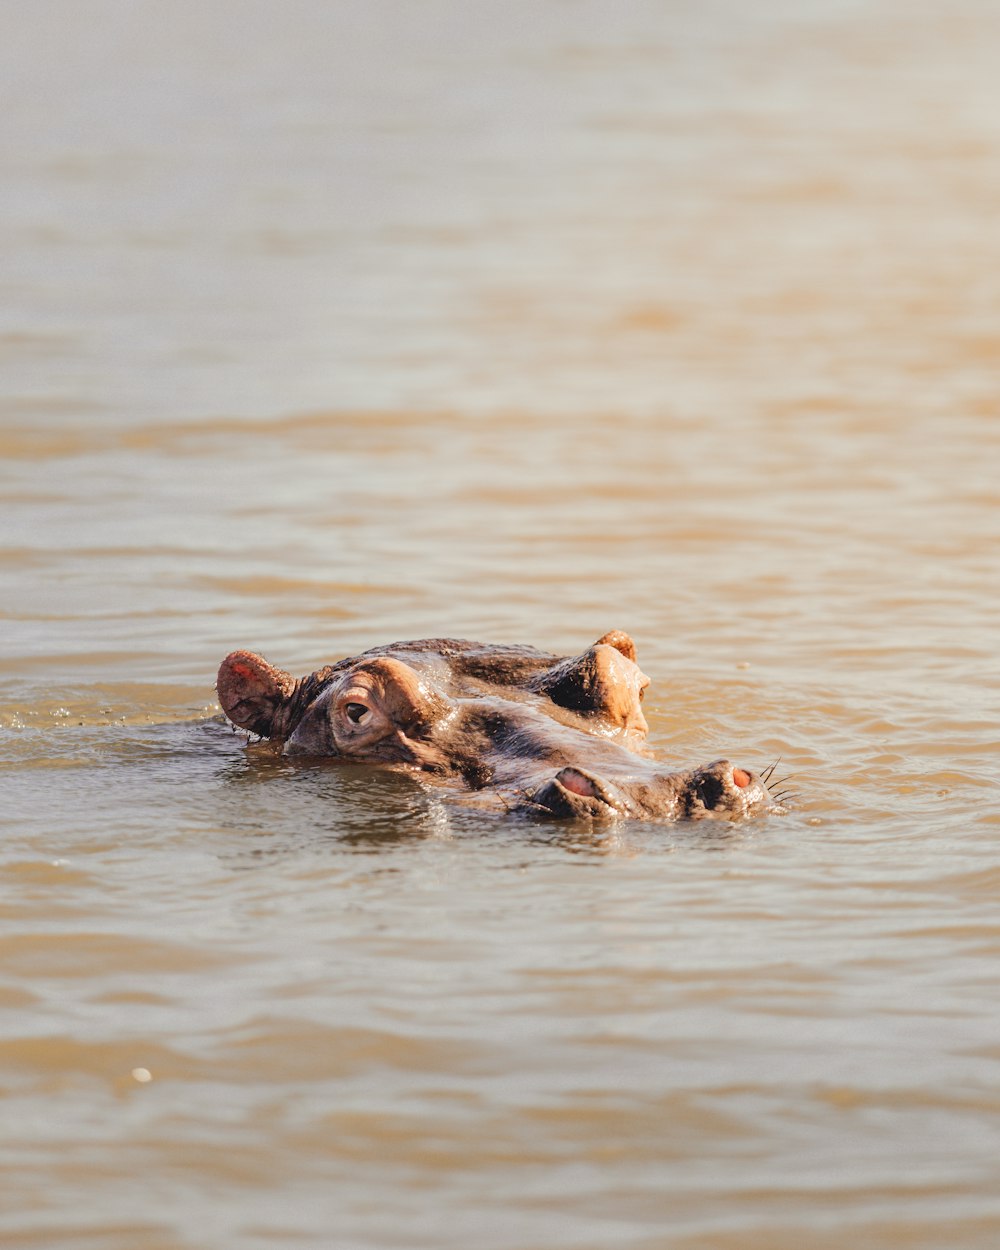 a hippopotamus swimming in water